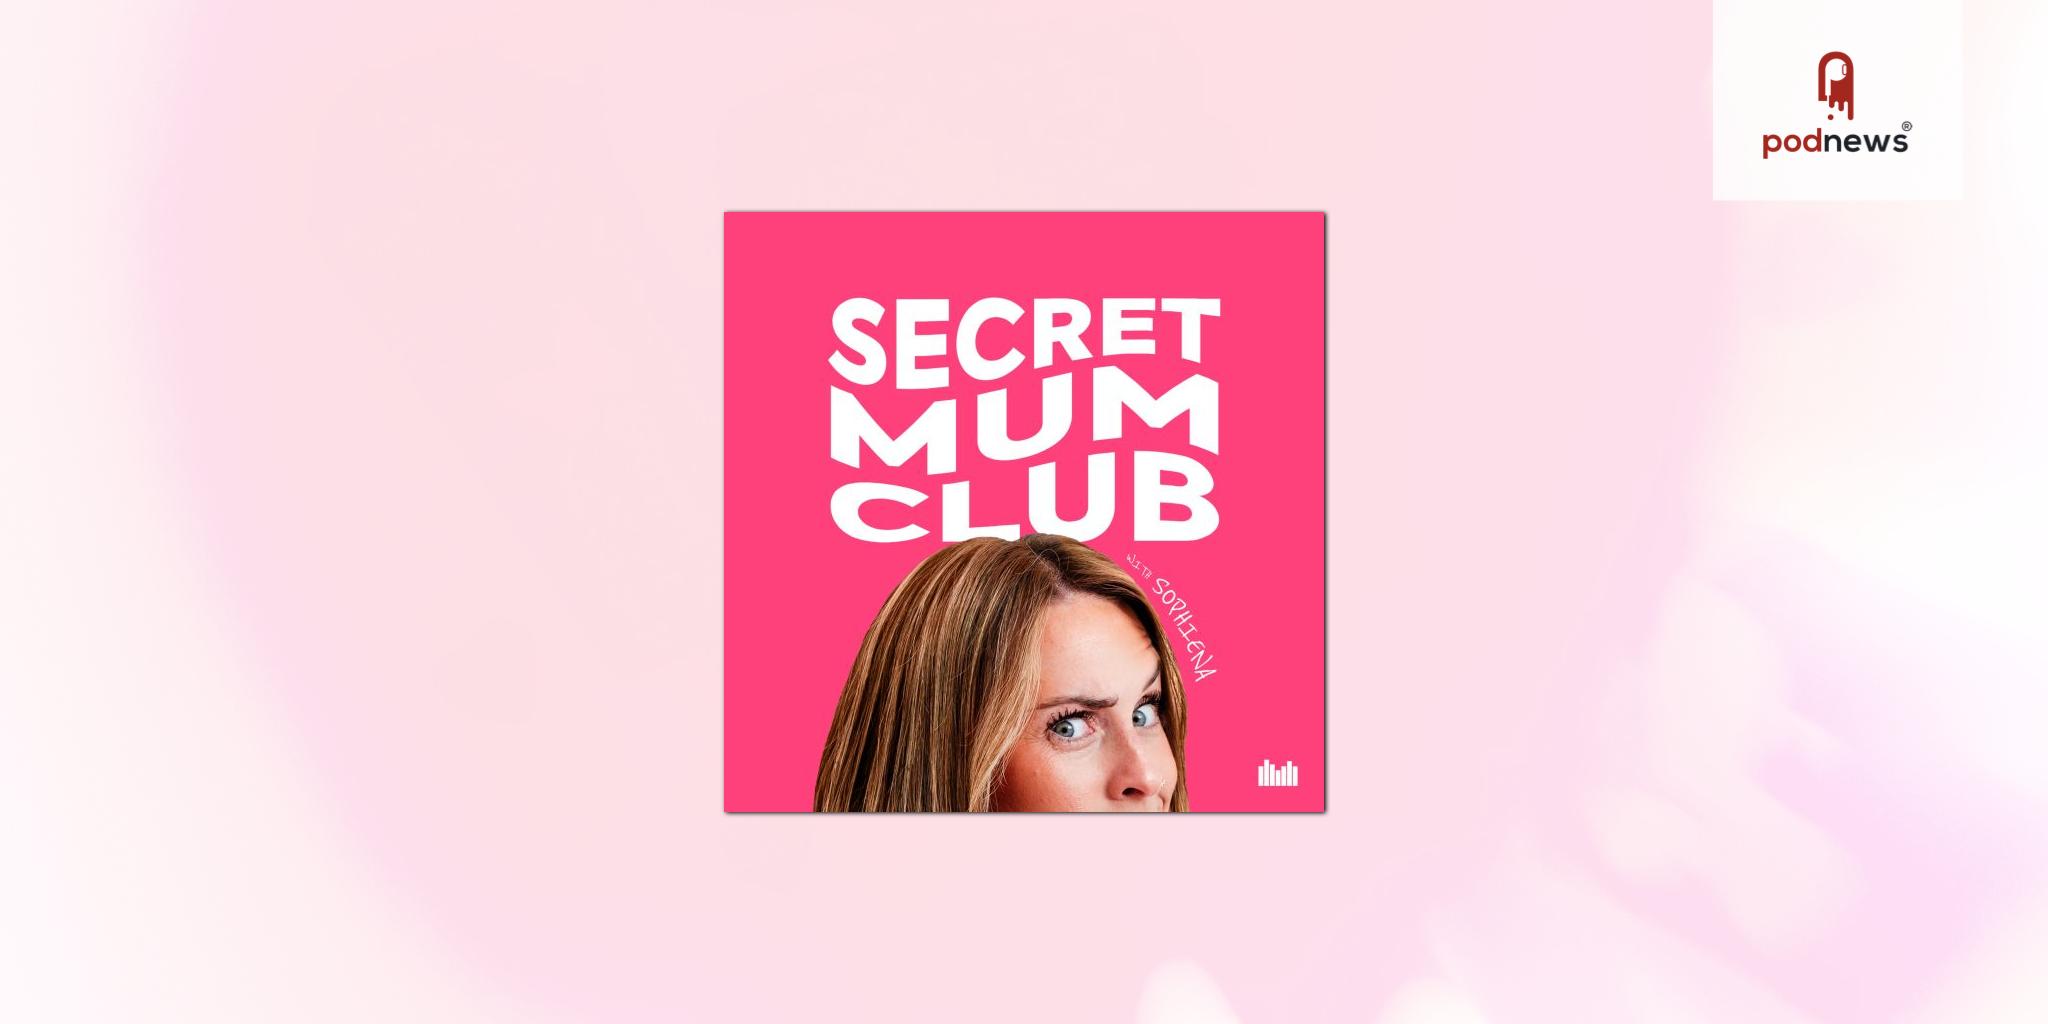 TikTok sensation Sophiena launches Secret Mum Club podcast with Audio Always